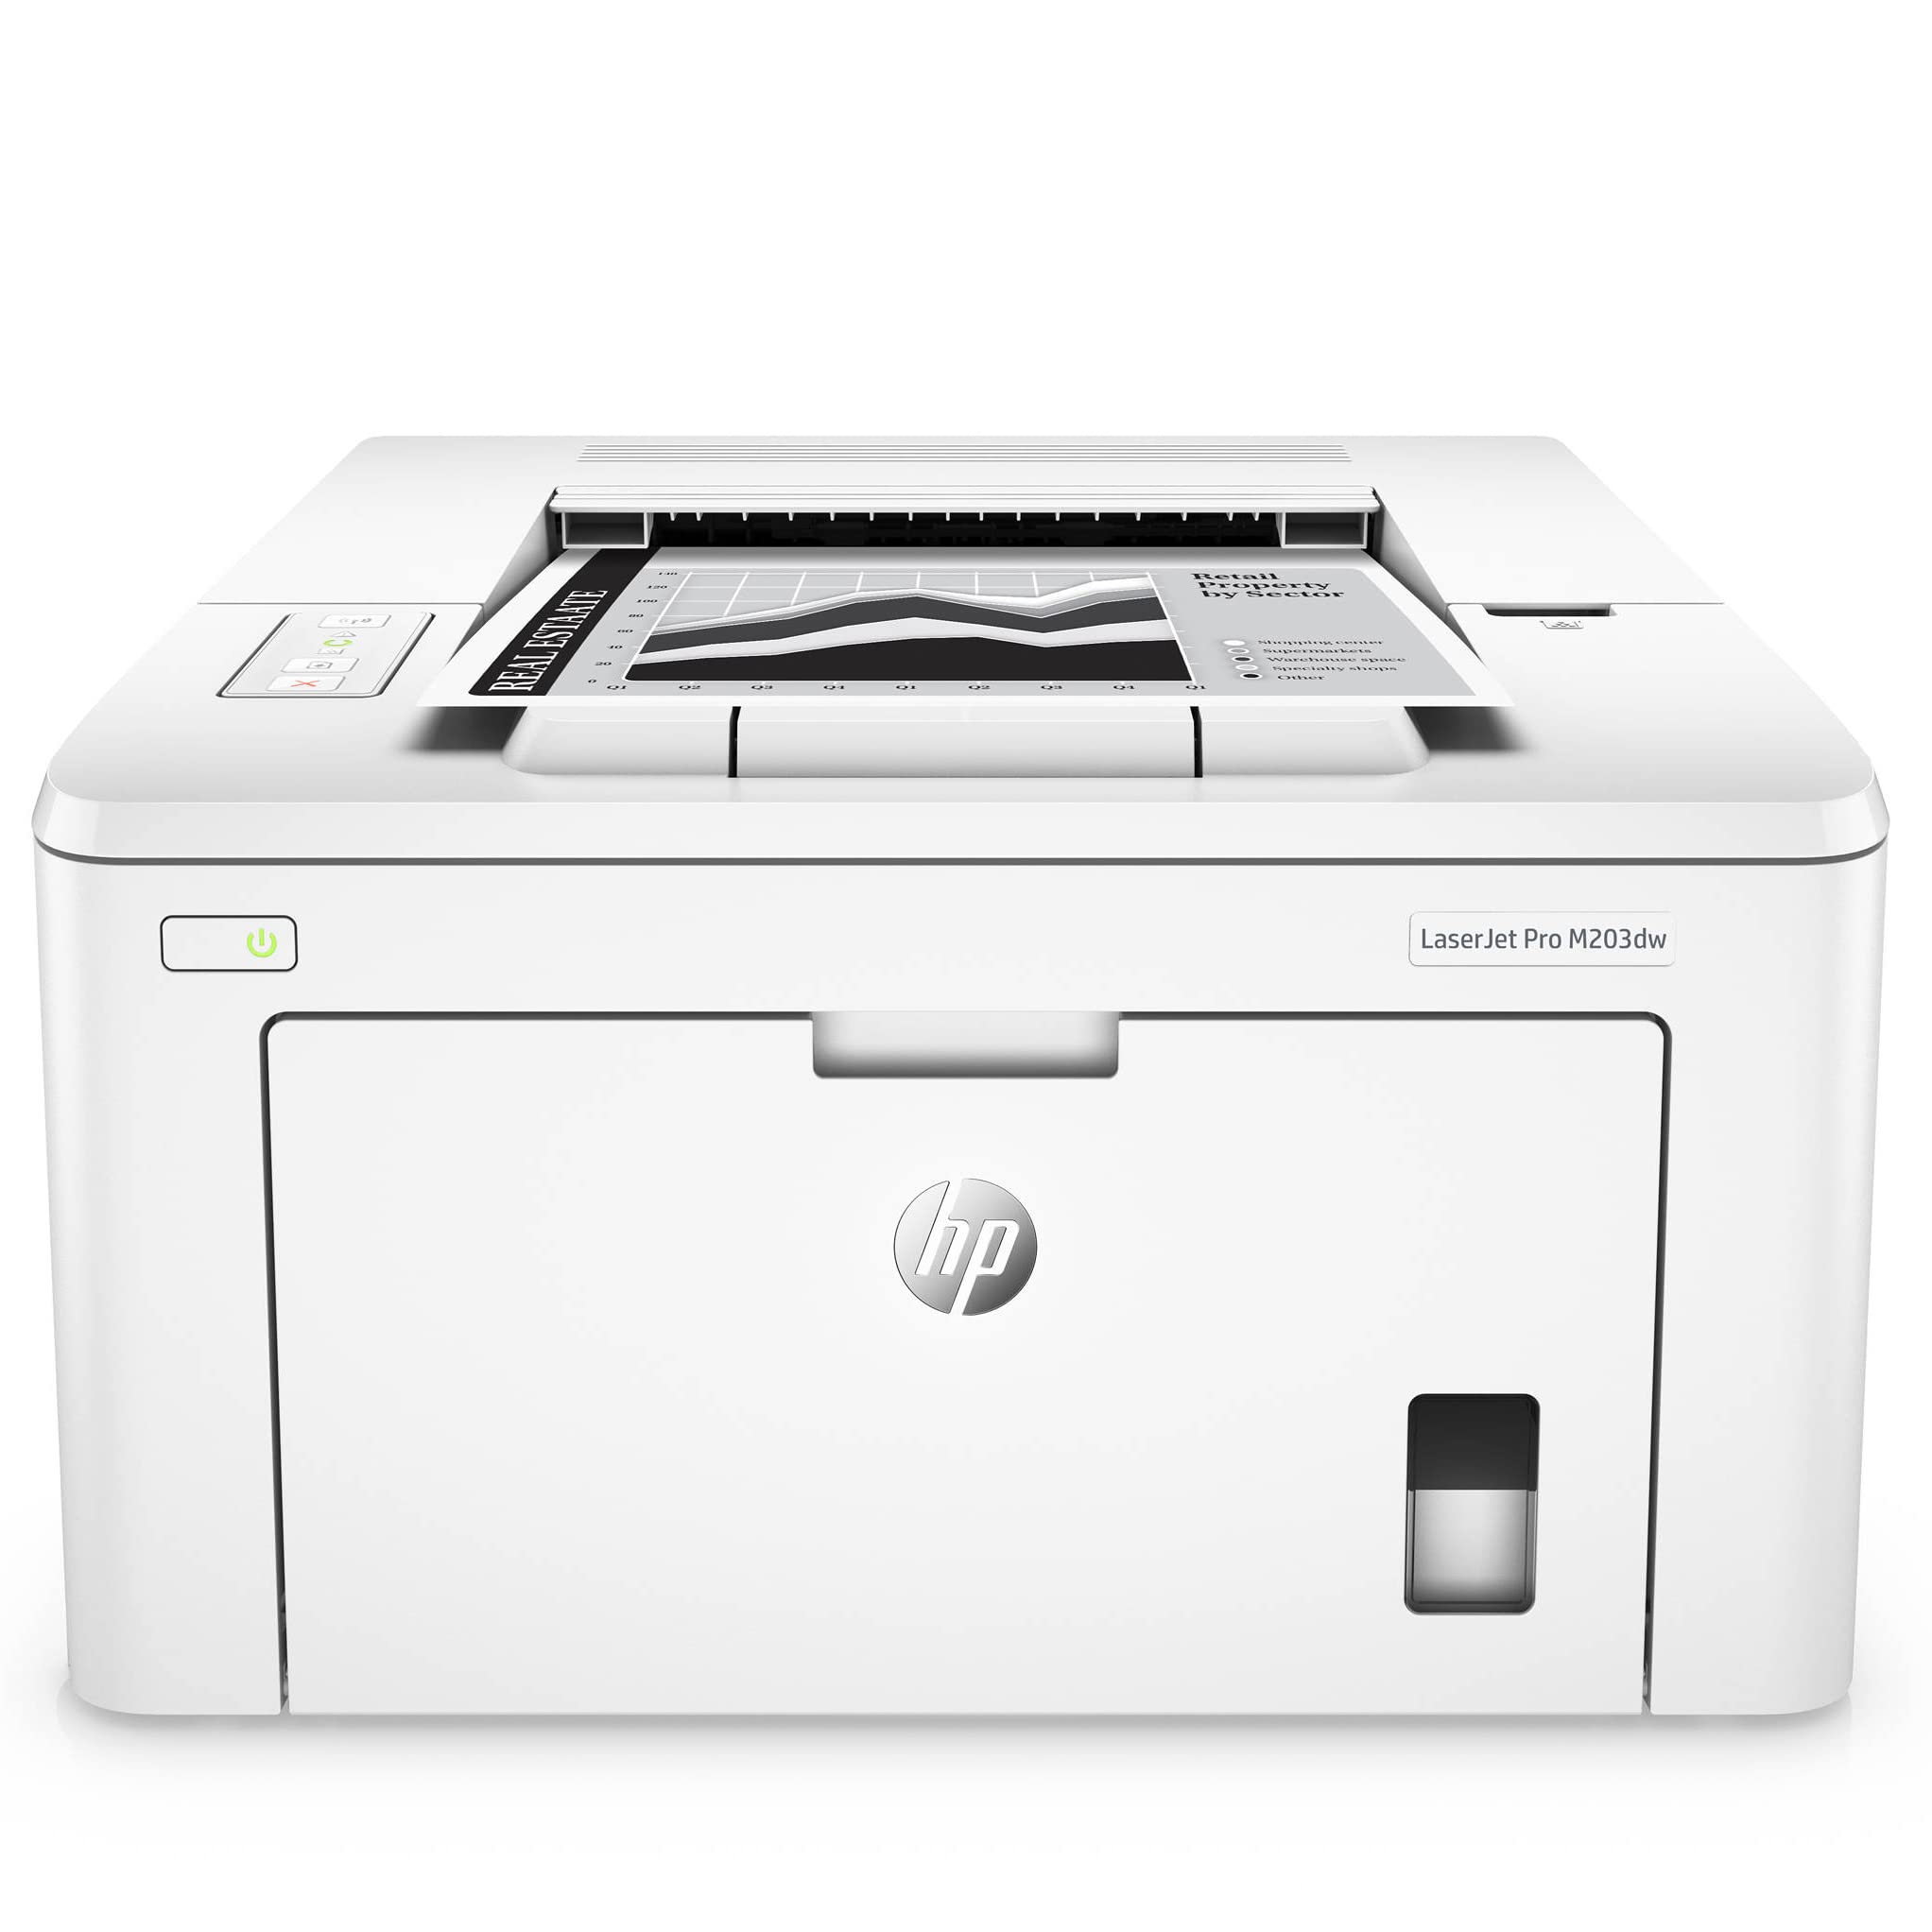 HP Laserjet Pro M203dwC Print Only Wireless Monochrome Laser Printer for Home Office - 30 ppm, 1200 x 1200 dpi, 8.5 x 14 Print Size, Auto Duplex Pr...